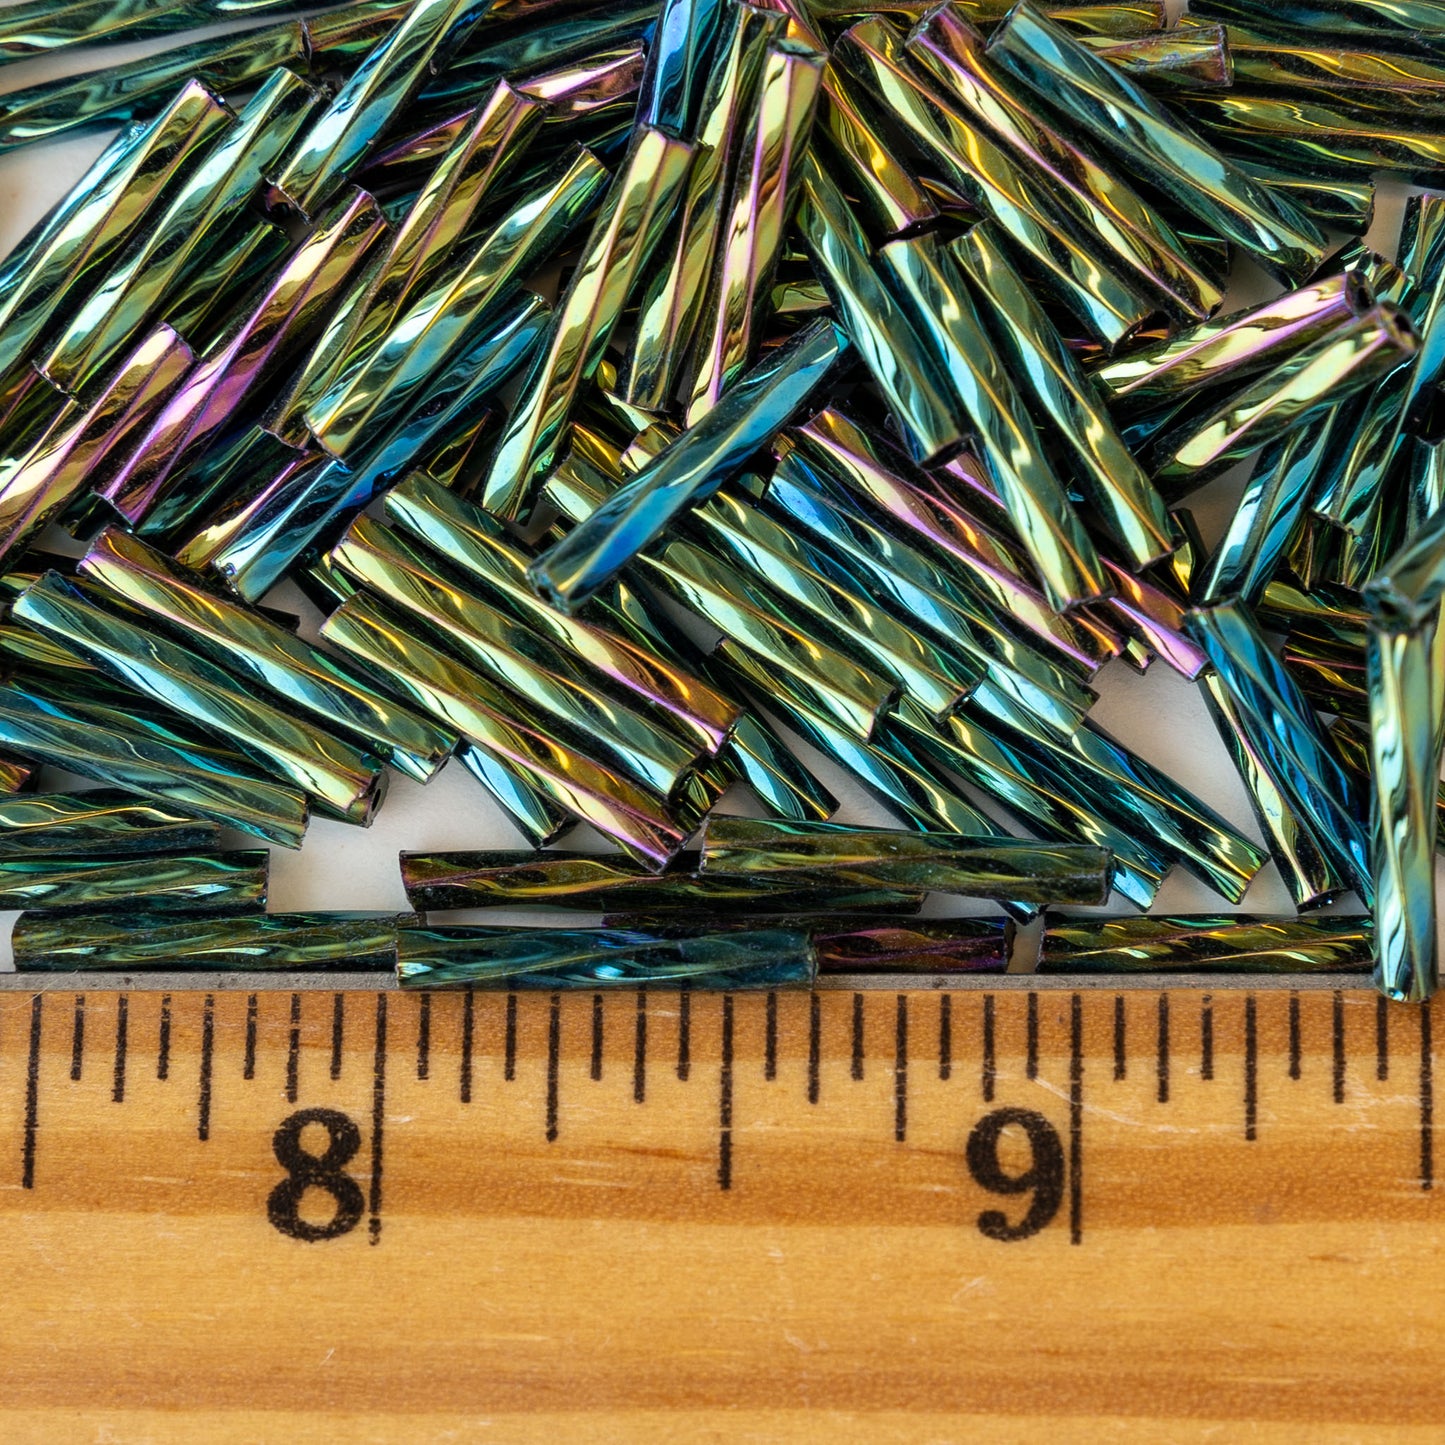 15mm Twisted Bugle Beads - Green Iris - 200 Beads